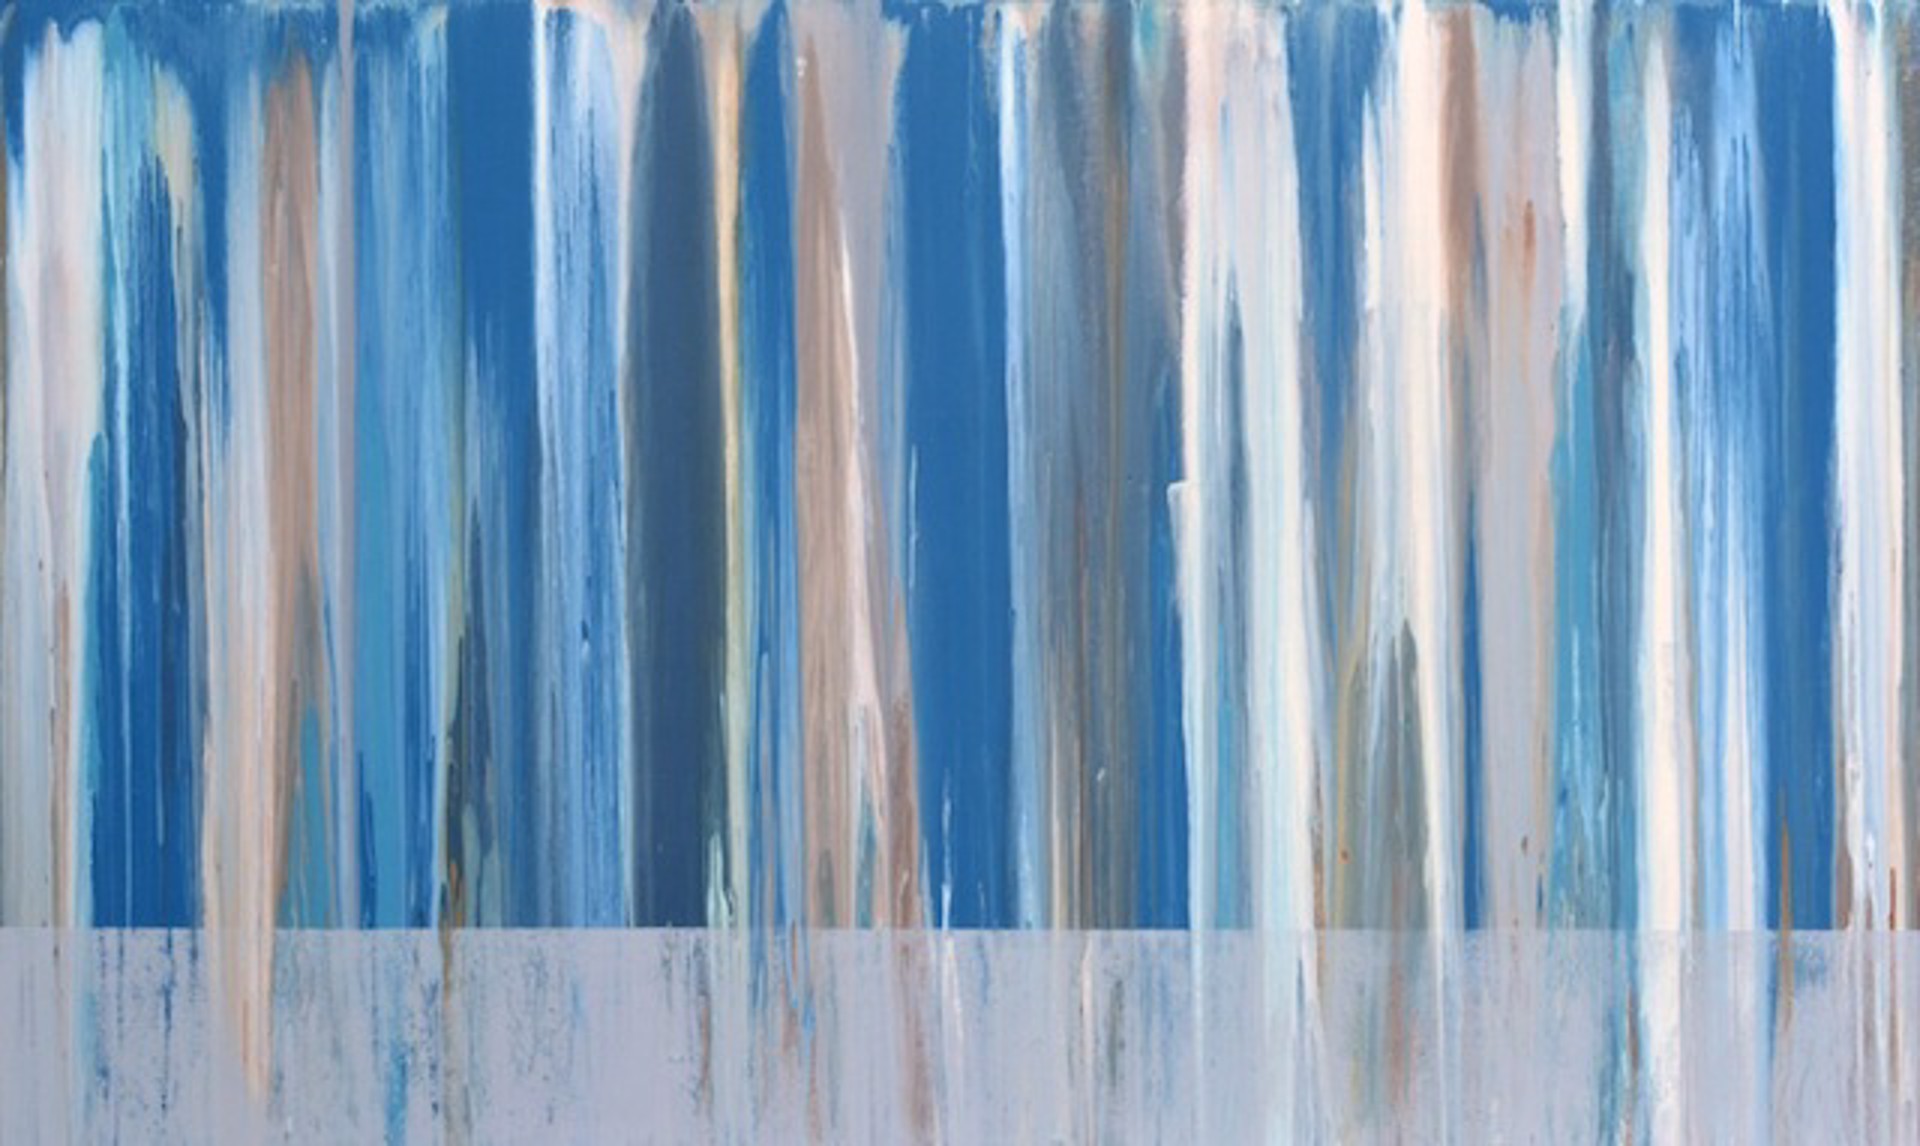 Still Water Series, 11-3660-1 by Andrzej M. Karwacki